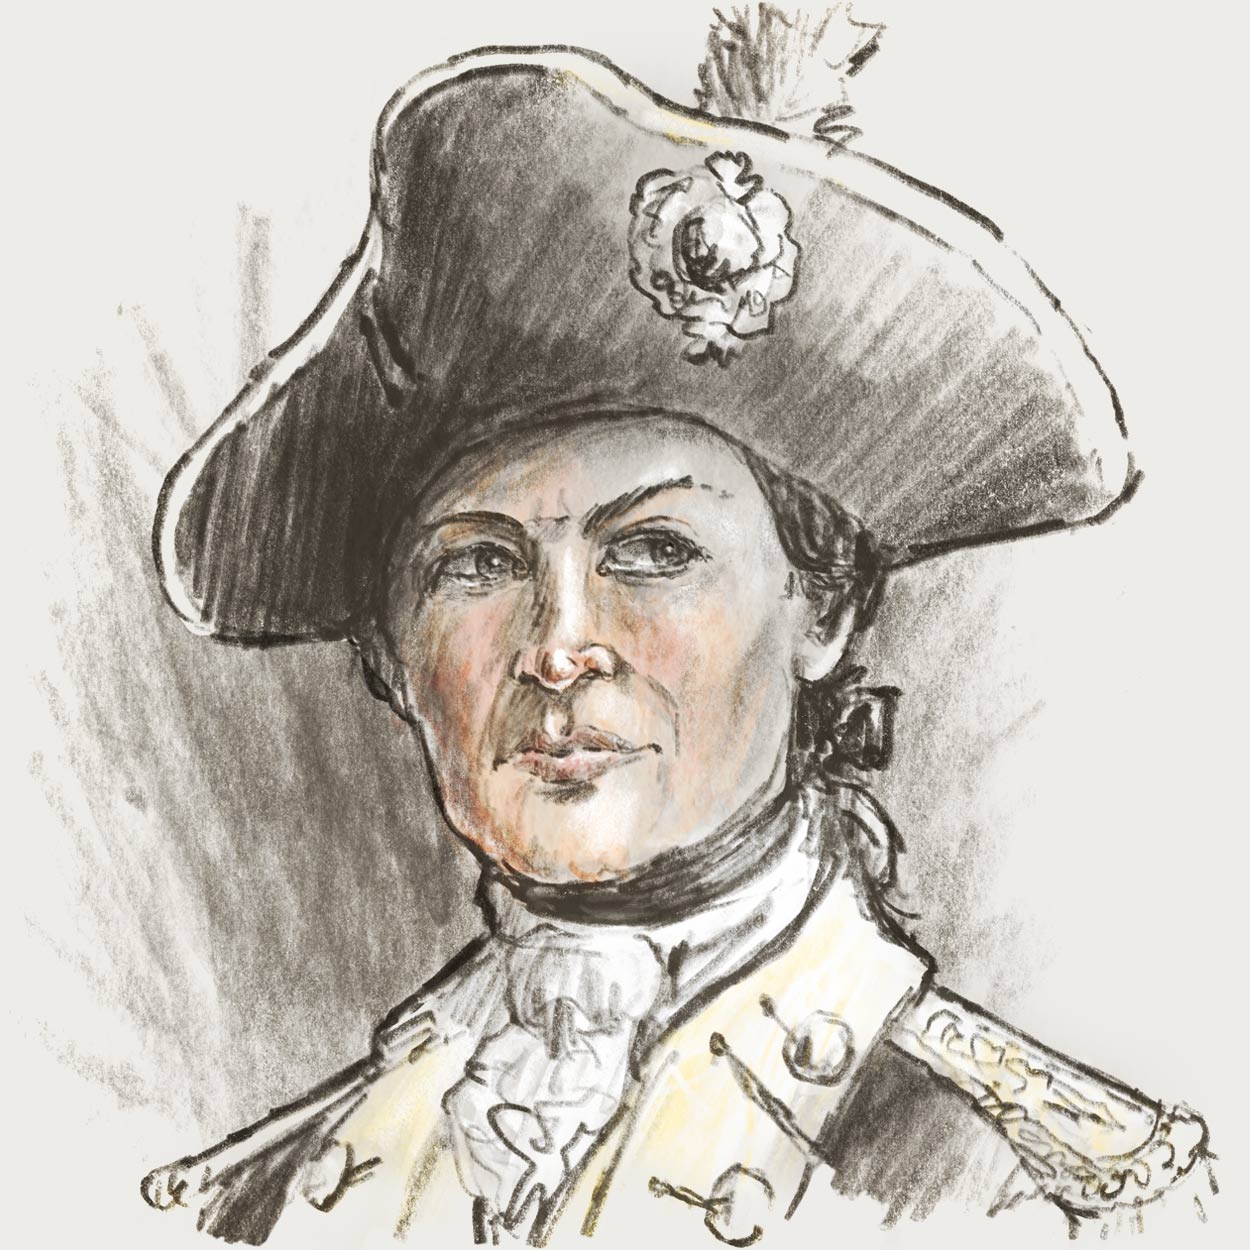 Drawn portrait of Michel Capitaine du Chesnoy